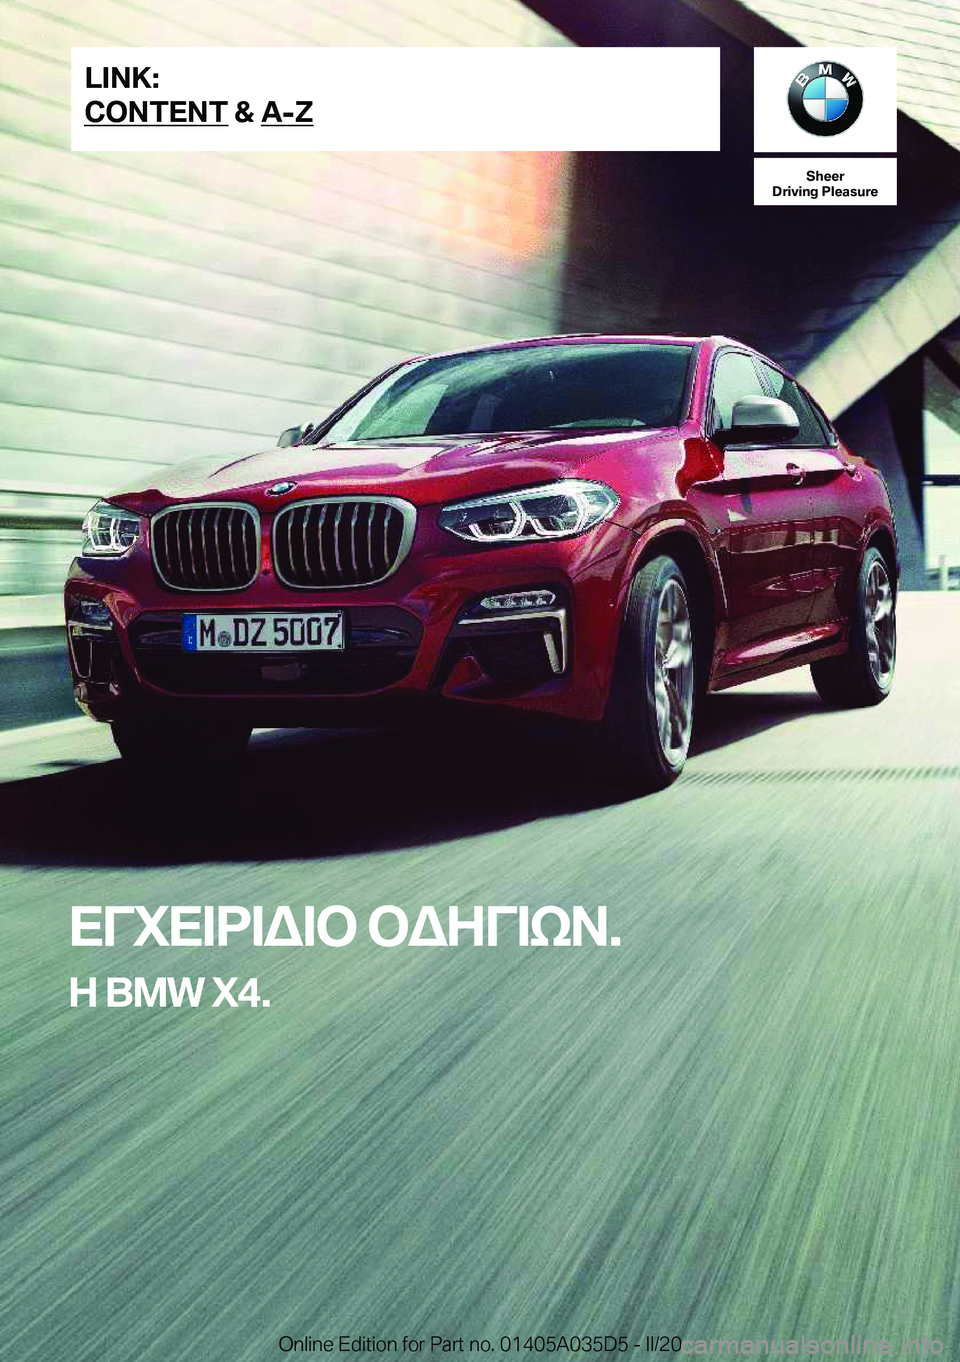 BMW X4 2020  ΟΔΗΓΌΣ ΧΡΉΣΗΣ (in Greek) �S�h�e�e�r
�D�r�i�v�i�n�g��P�l�e�a�s�u�r�e
XViX=d=W=b�bWZV=kA�.
Z��B�M�W��X�4�.�L�I�N�K�:
�C�O�N�T�E�N�T��&��A�-�Z�O�n�l�i�n�e��E�d�i�t�i�o�n��f�o�r��P�a�r�t��n�o�.��0�1�4